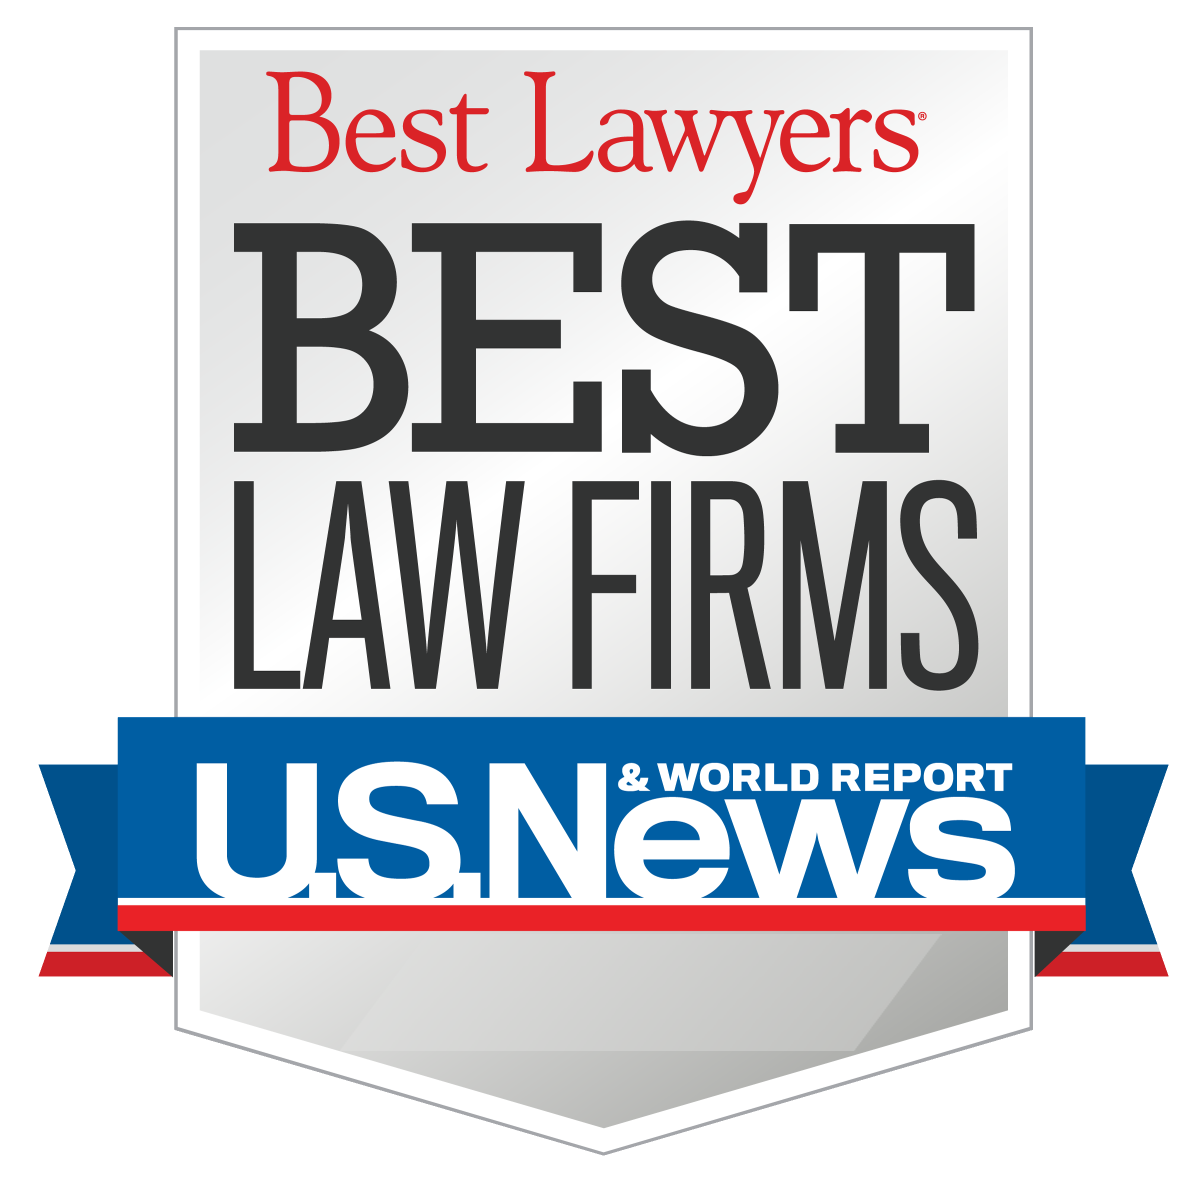 Best Law Firms (U.S. News)